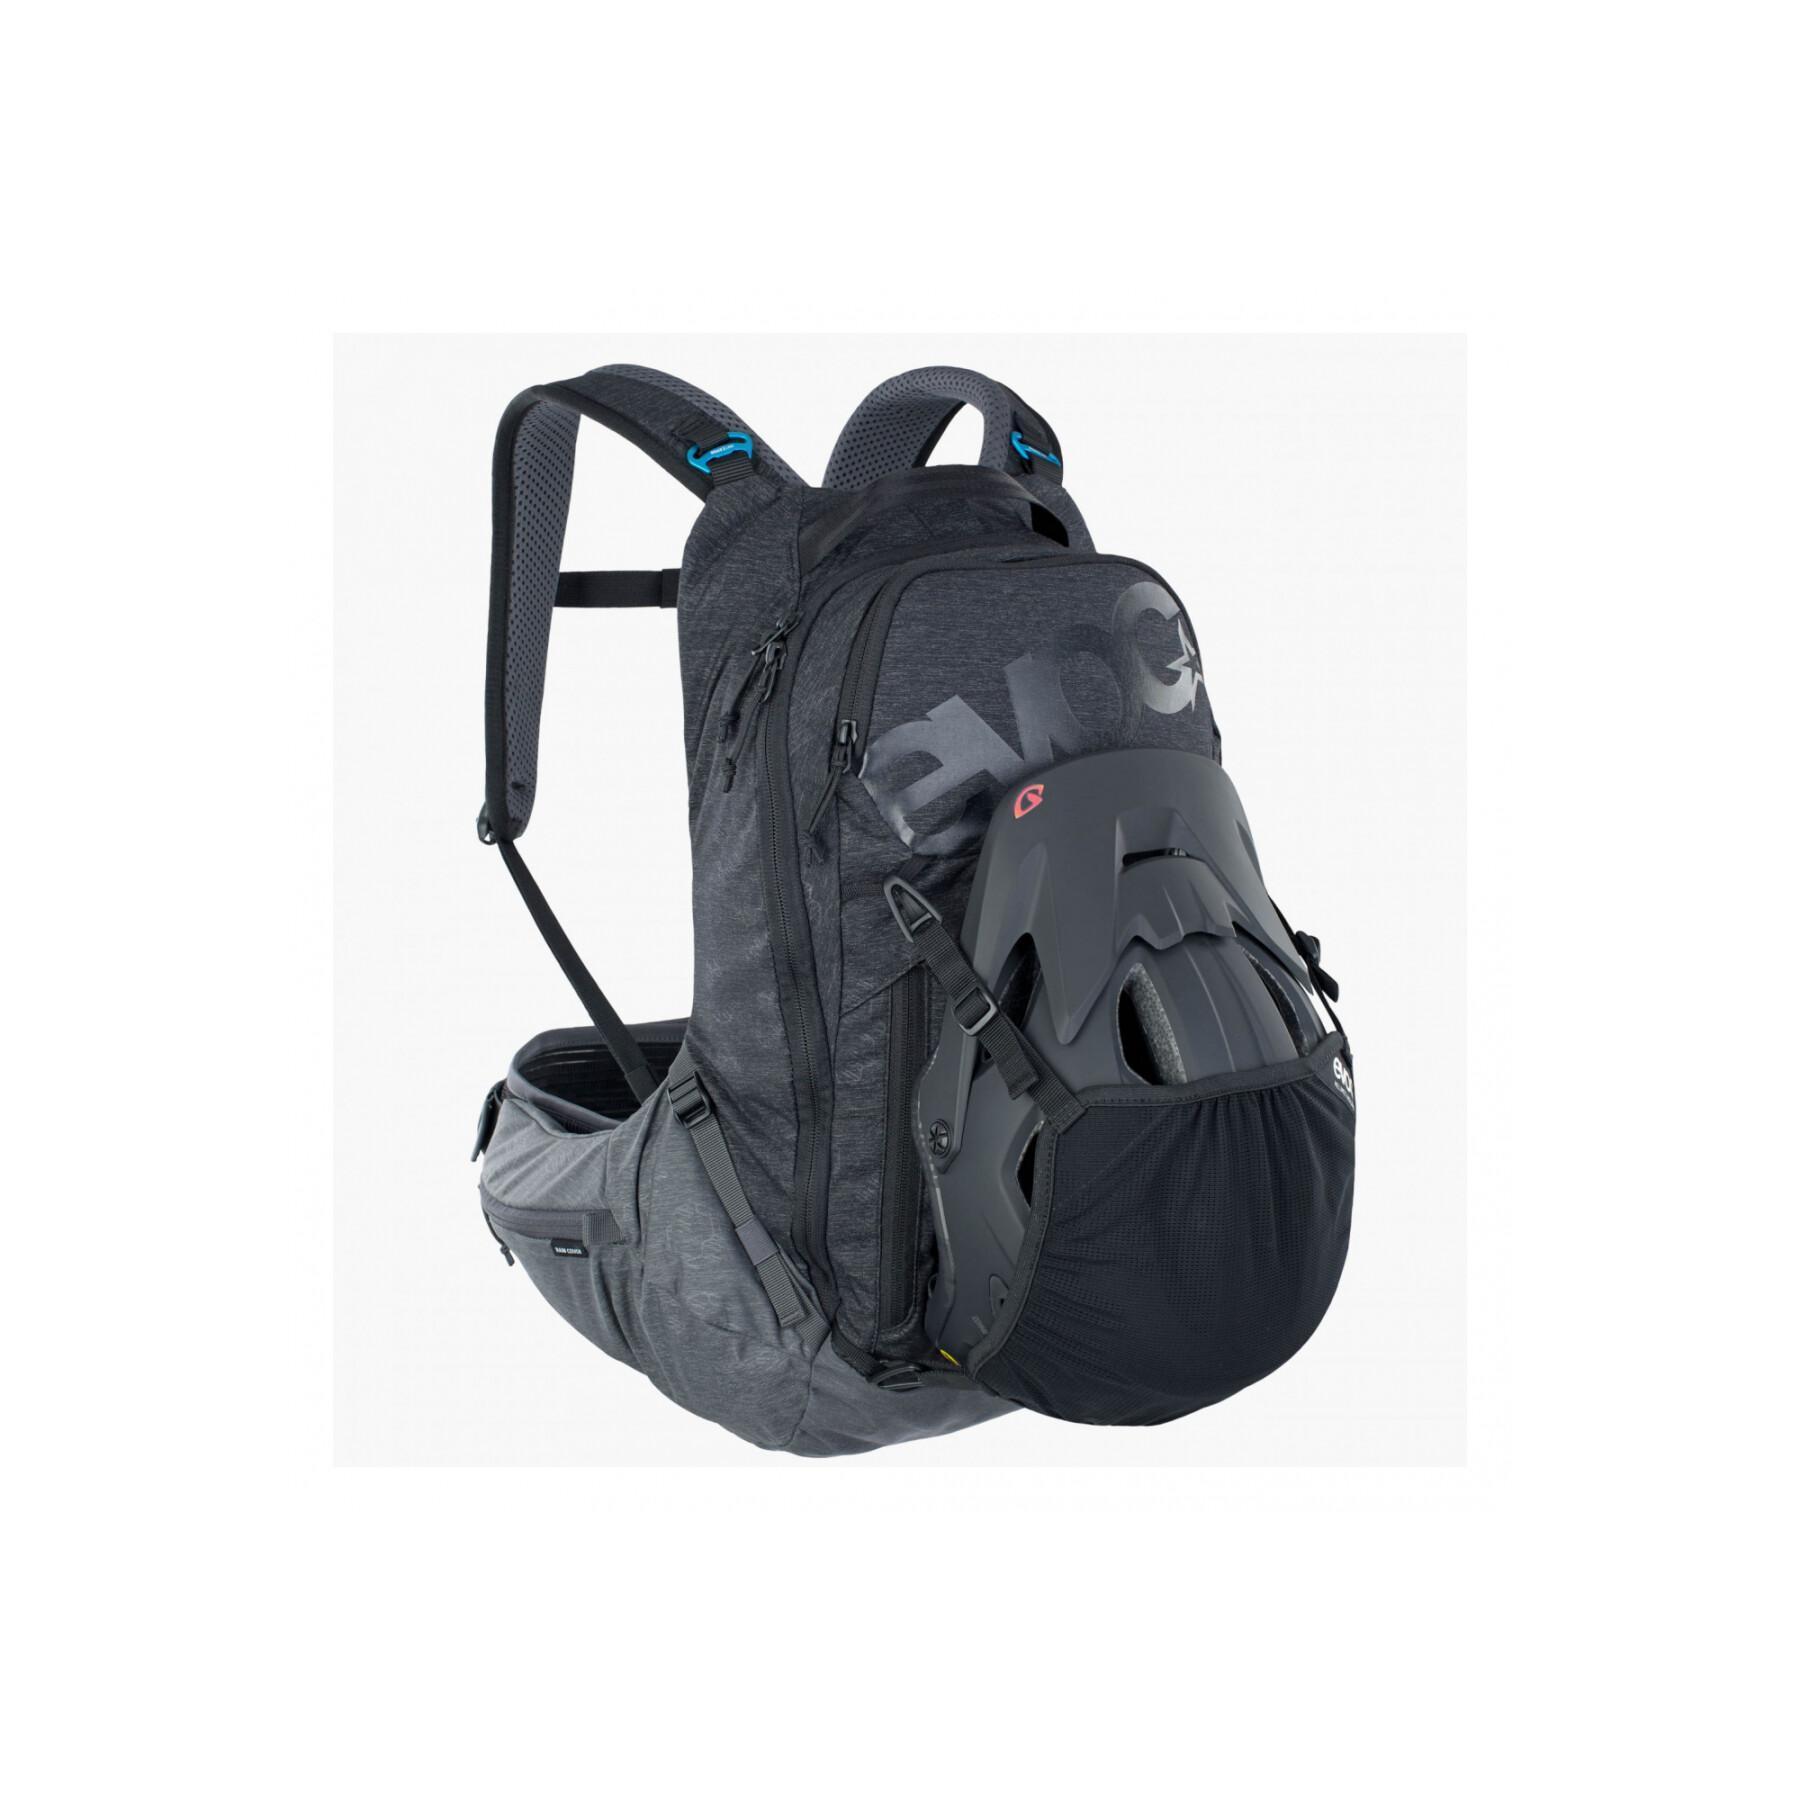 Backpack Evoc trail pro 16